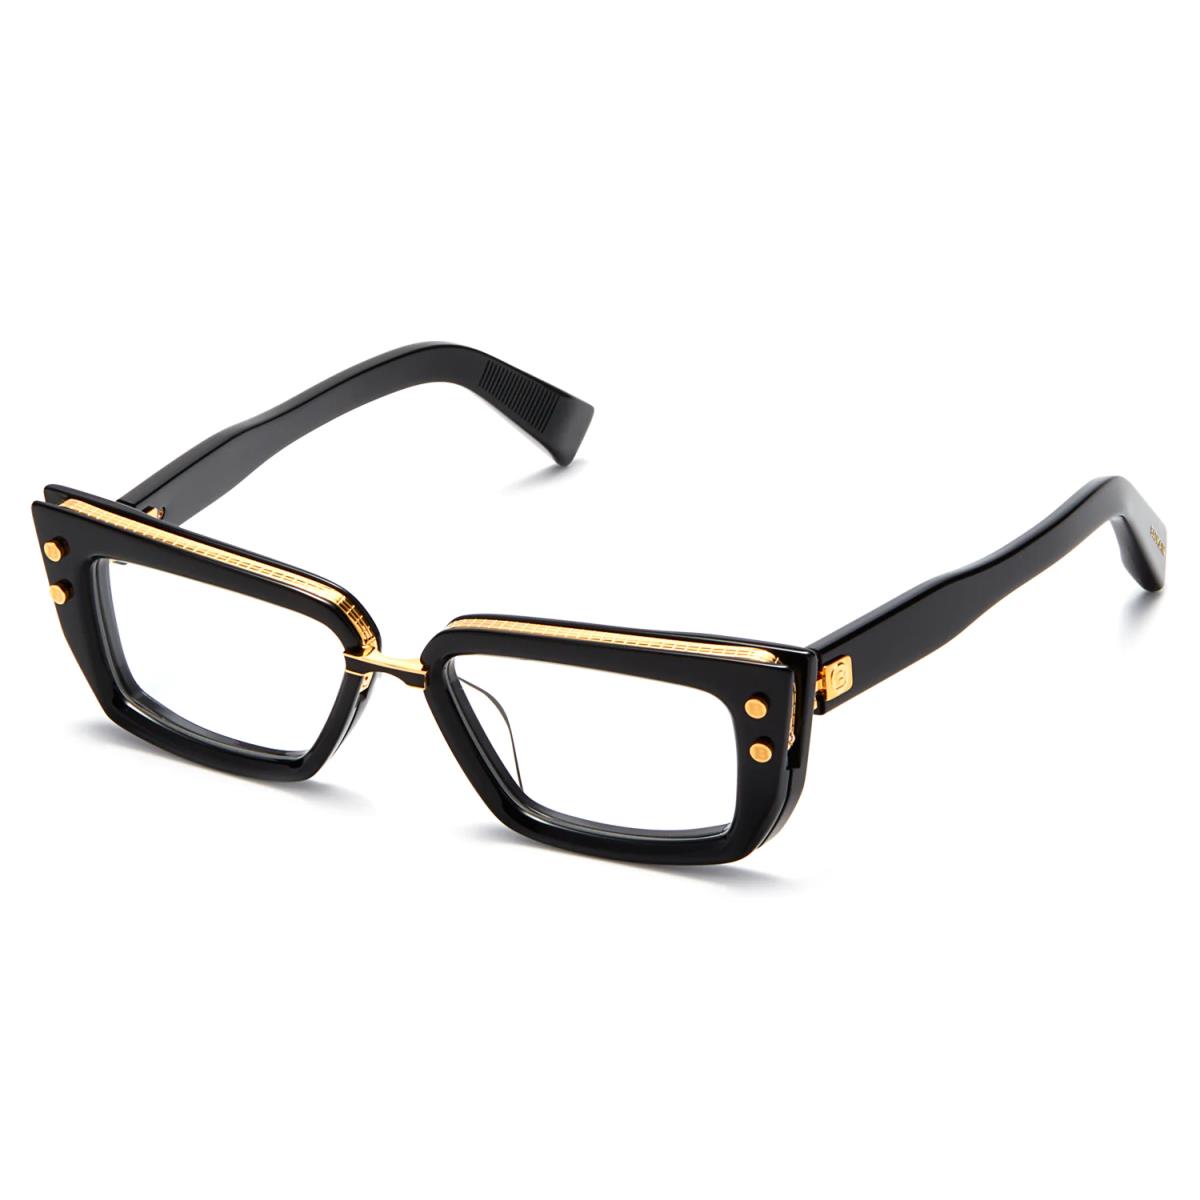 Balmain Eyeglasses Madame Black Gold Full Rim Frames 51MM Rx-able